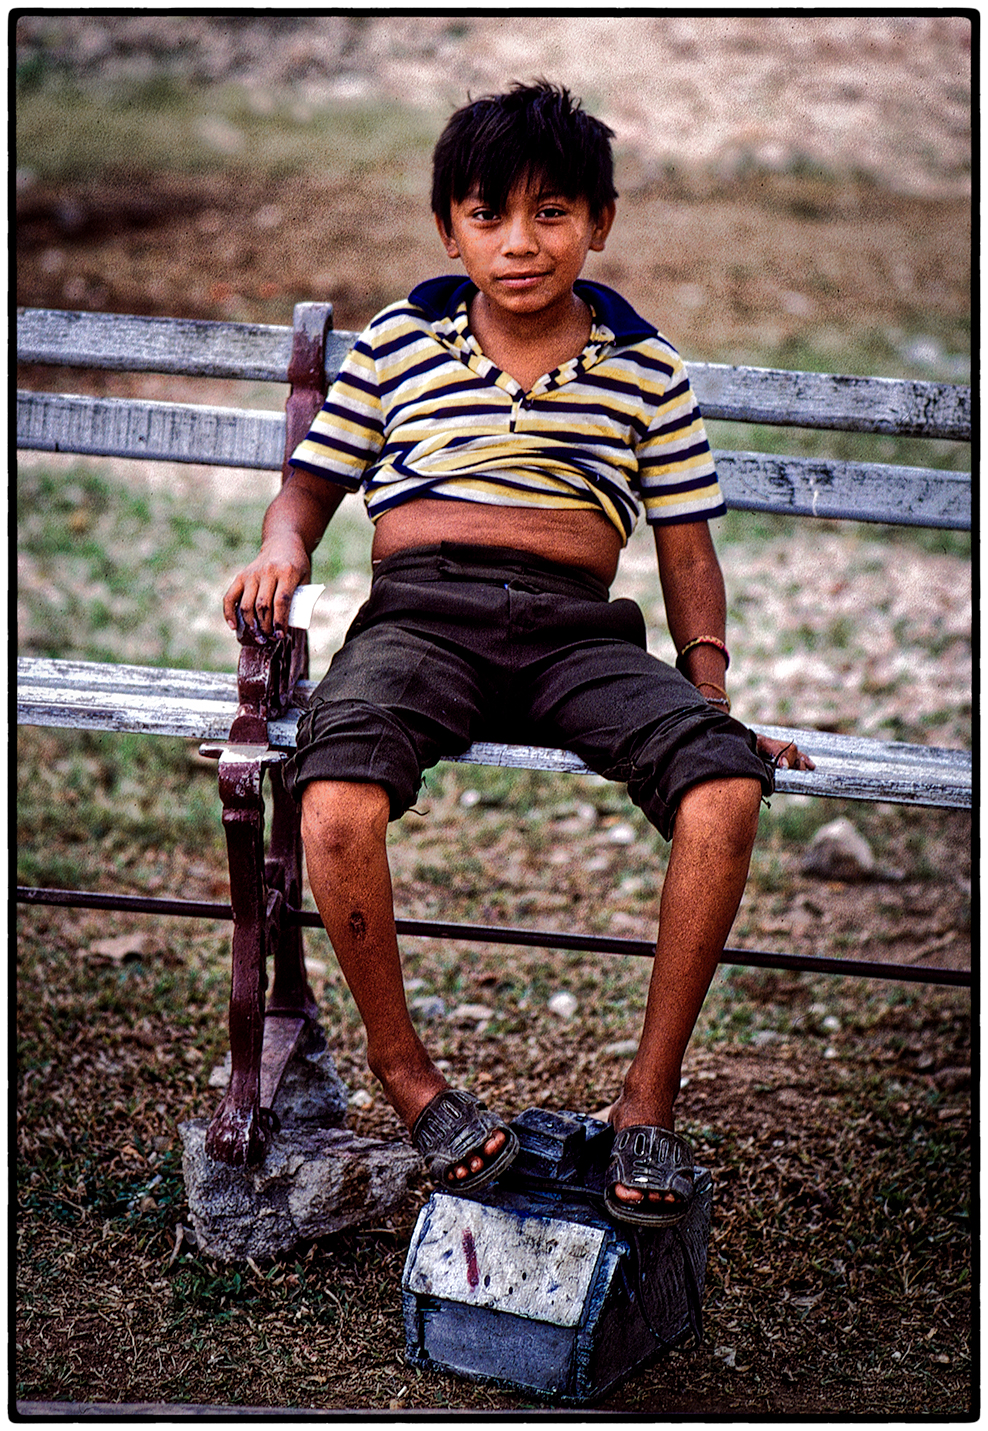 Shoeshine Boy, Mexico 1994